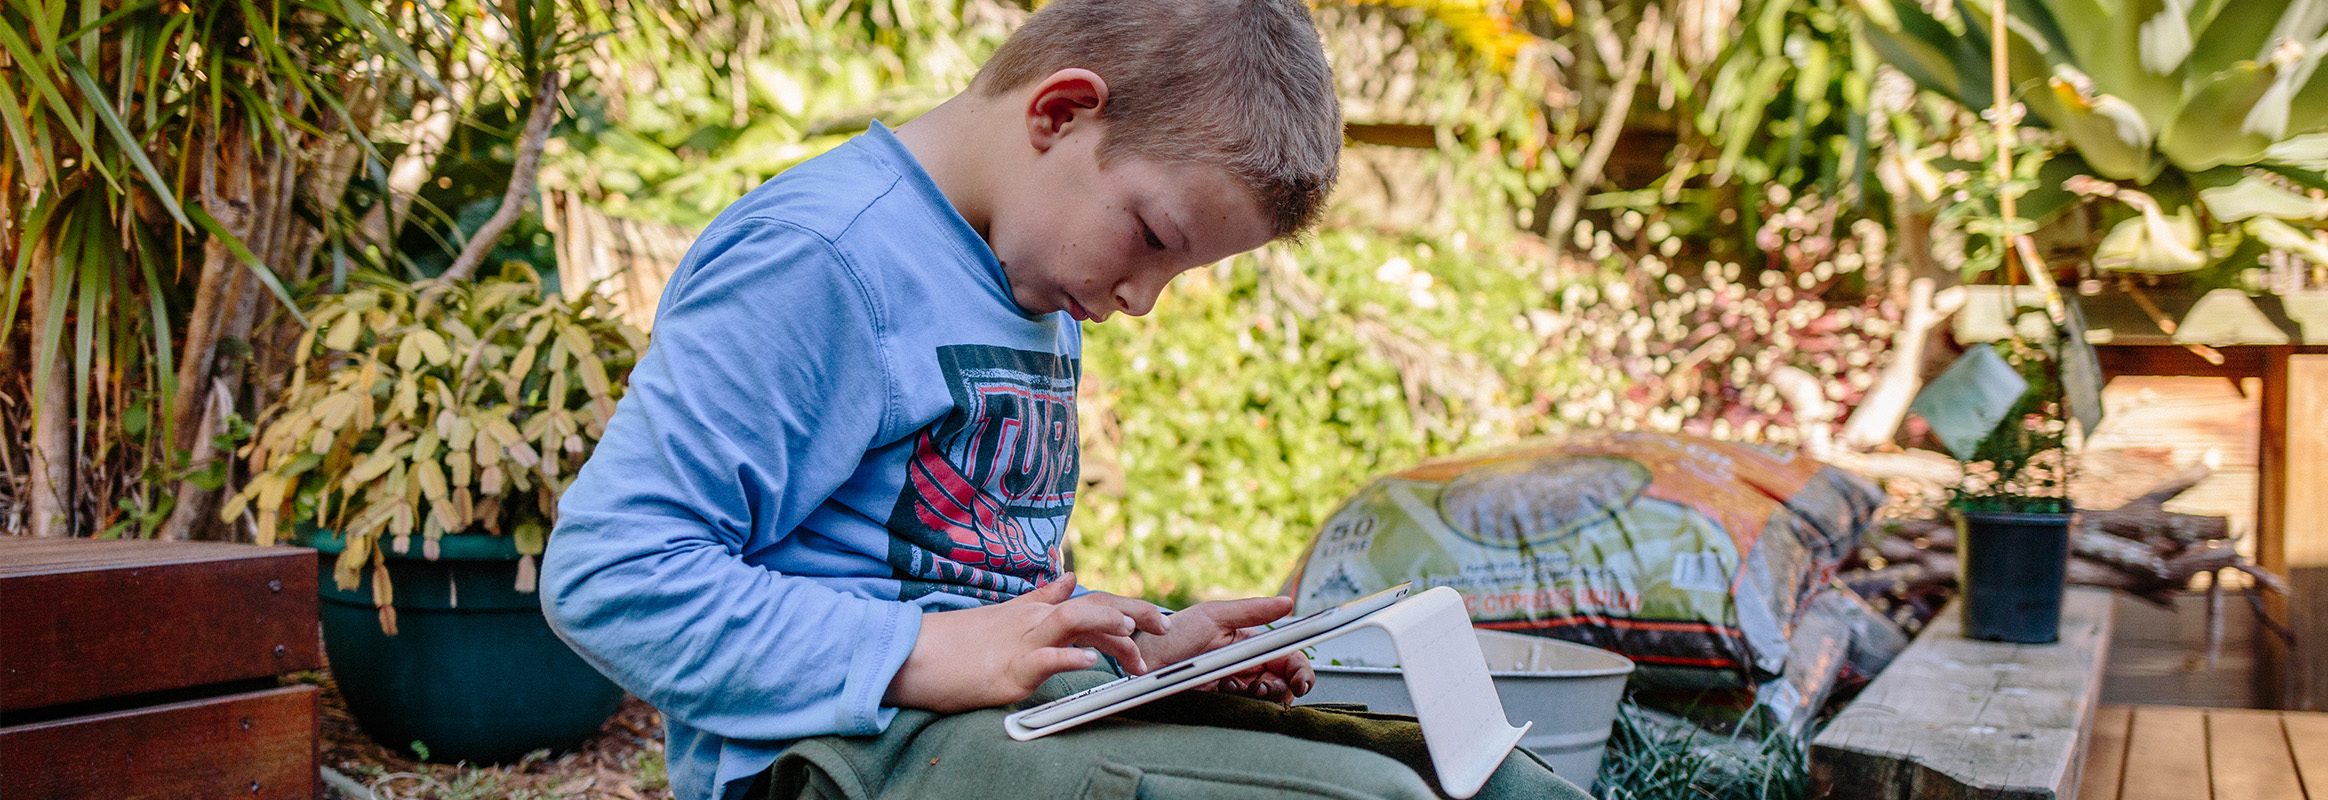 Young boy sitting outside using iPad